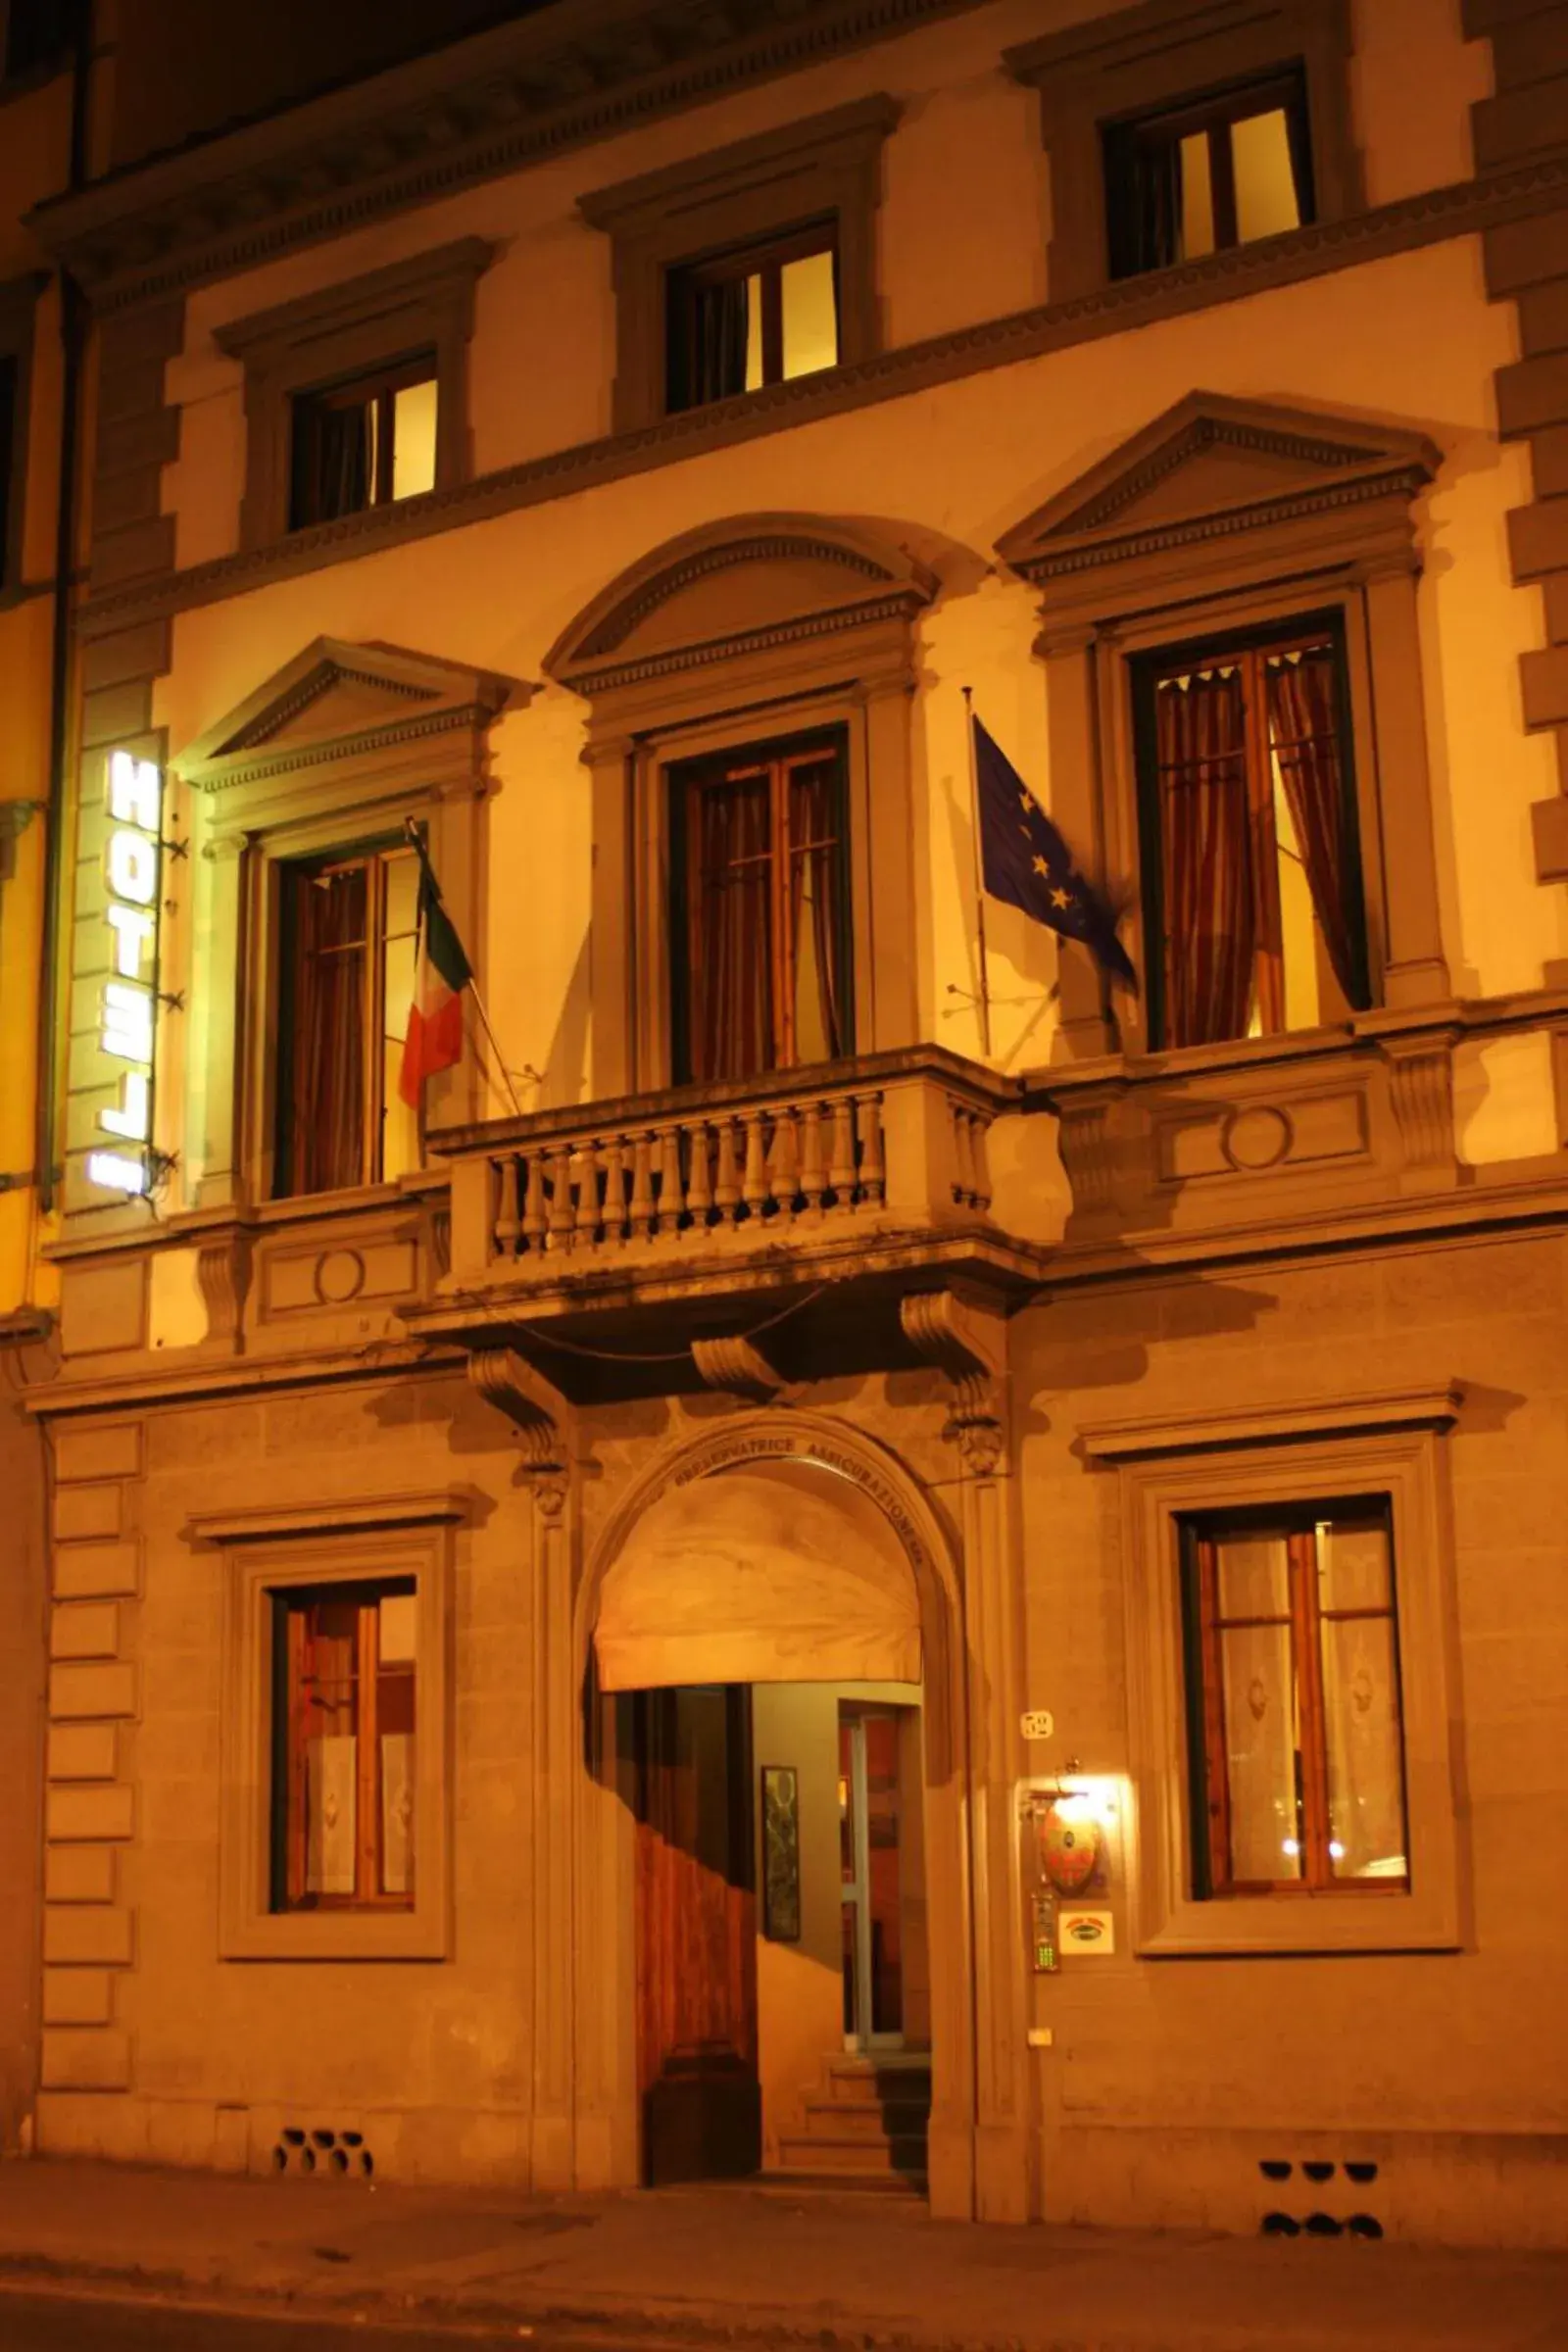 Facade/entrance, Property Building in Hotel Bella Firenze